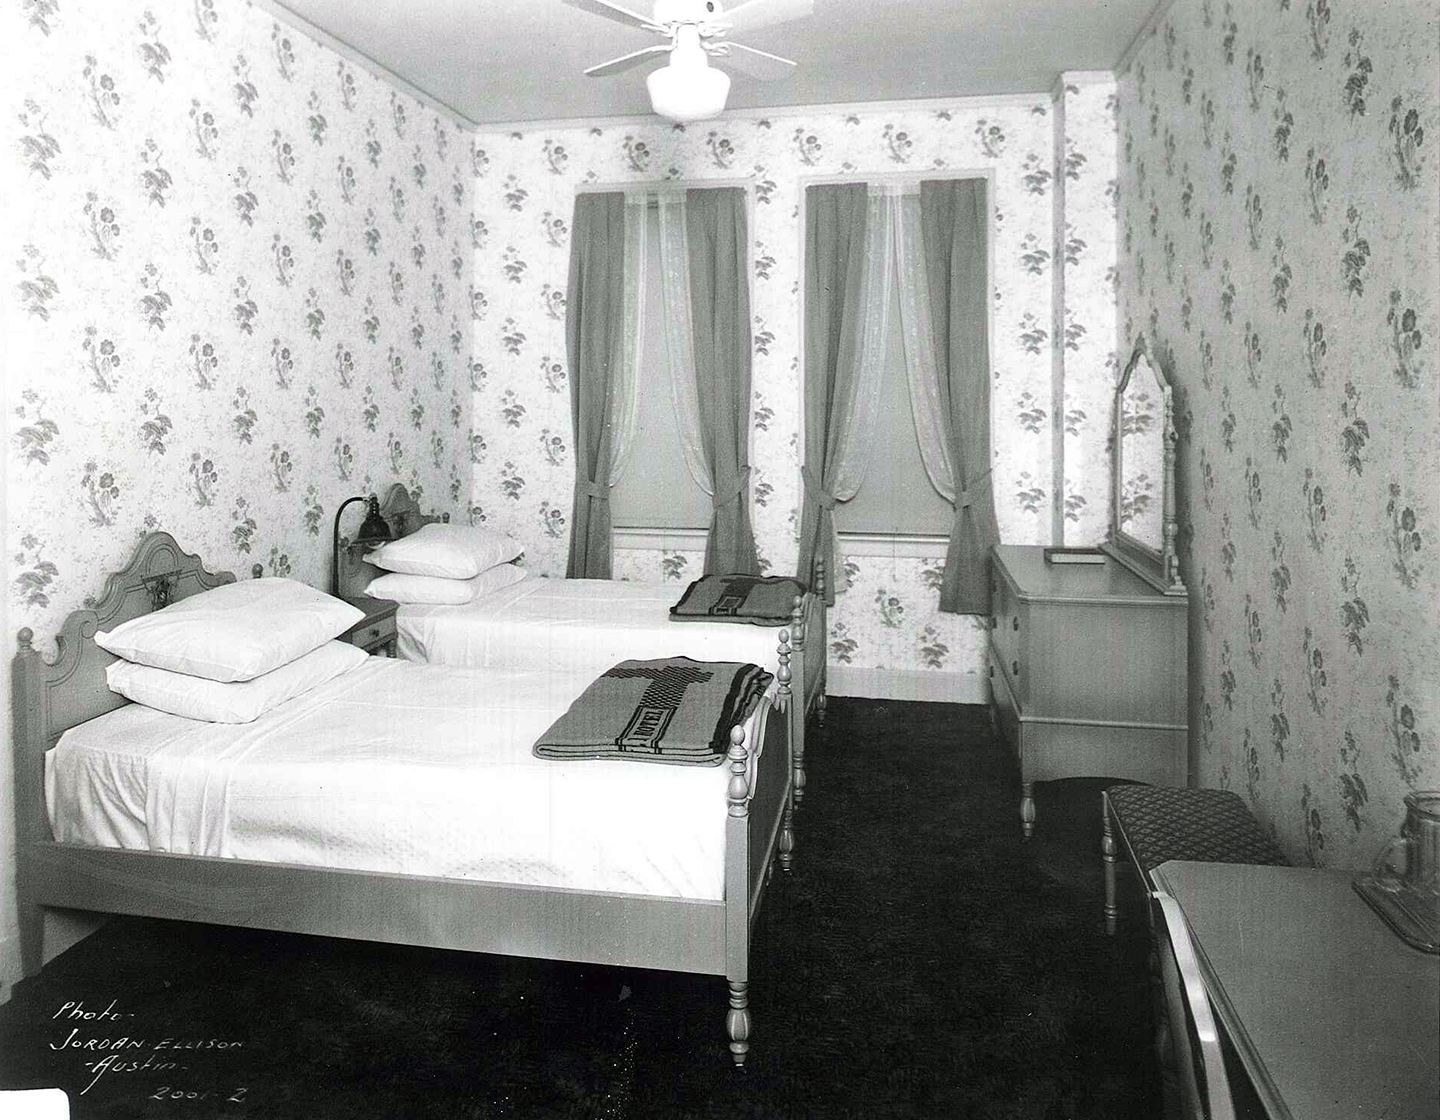 Historic Driskill guestroom at the hotel in Austin, Texas